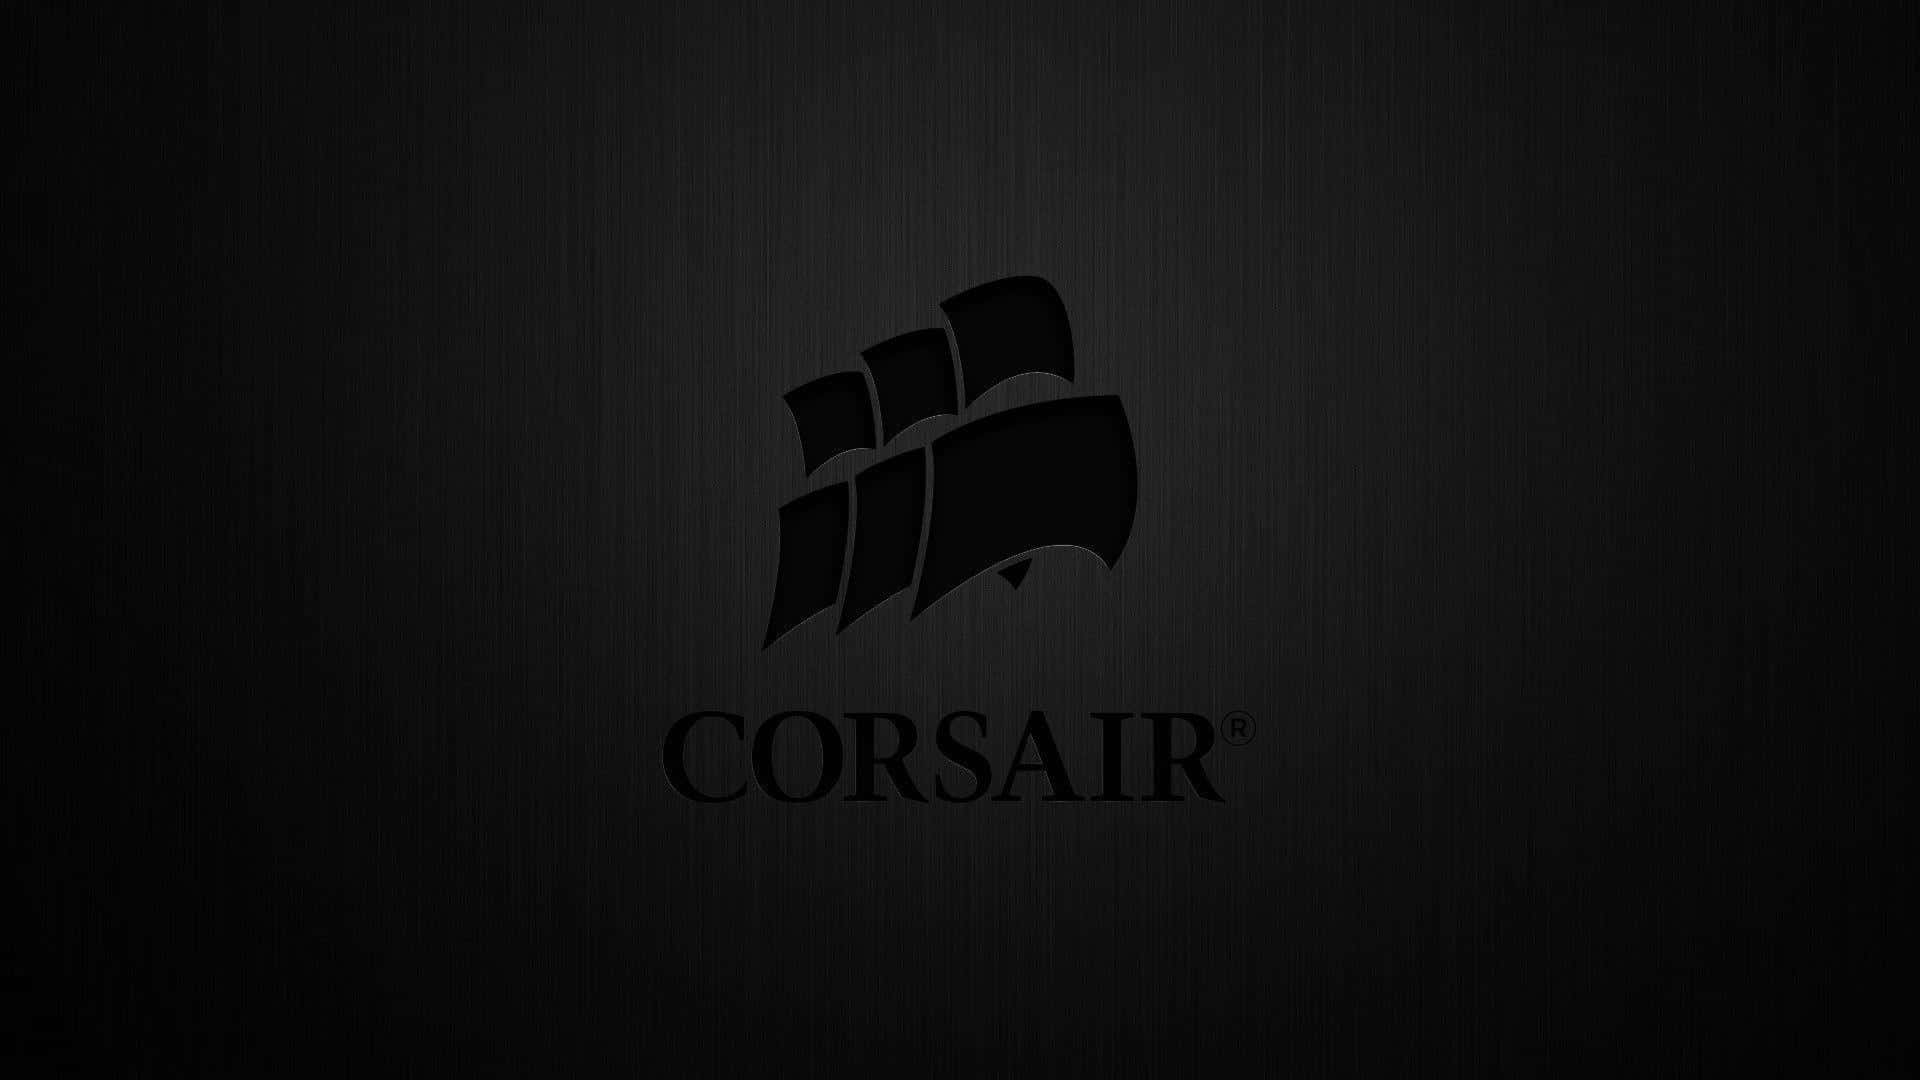 Download Corsair Logo On A Black Background